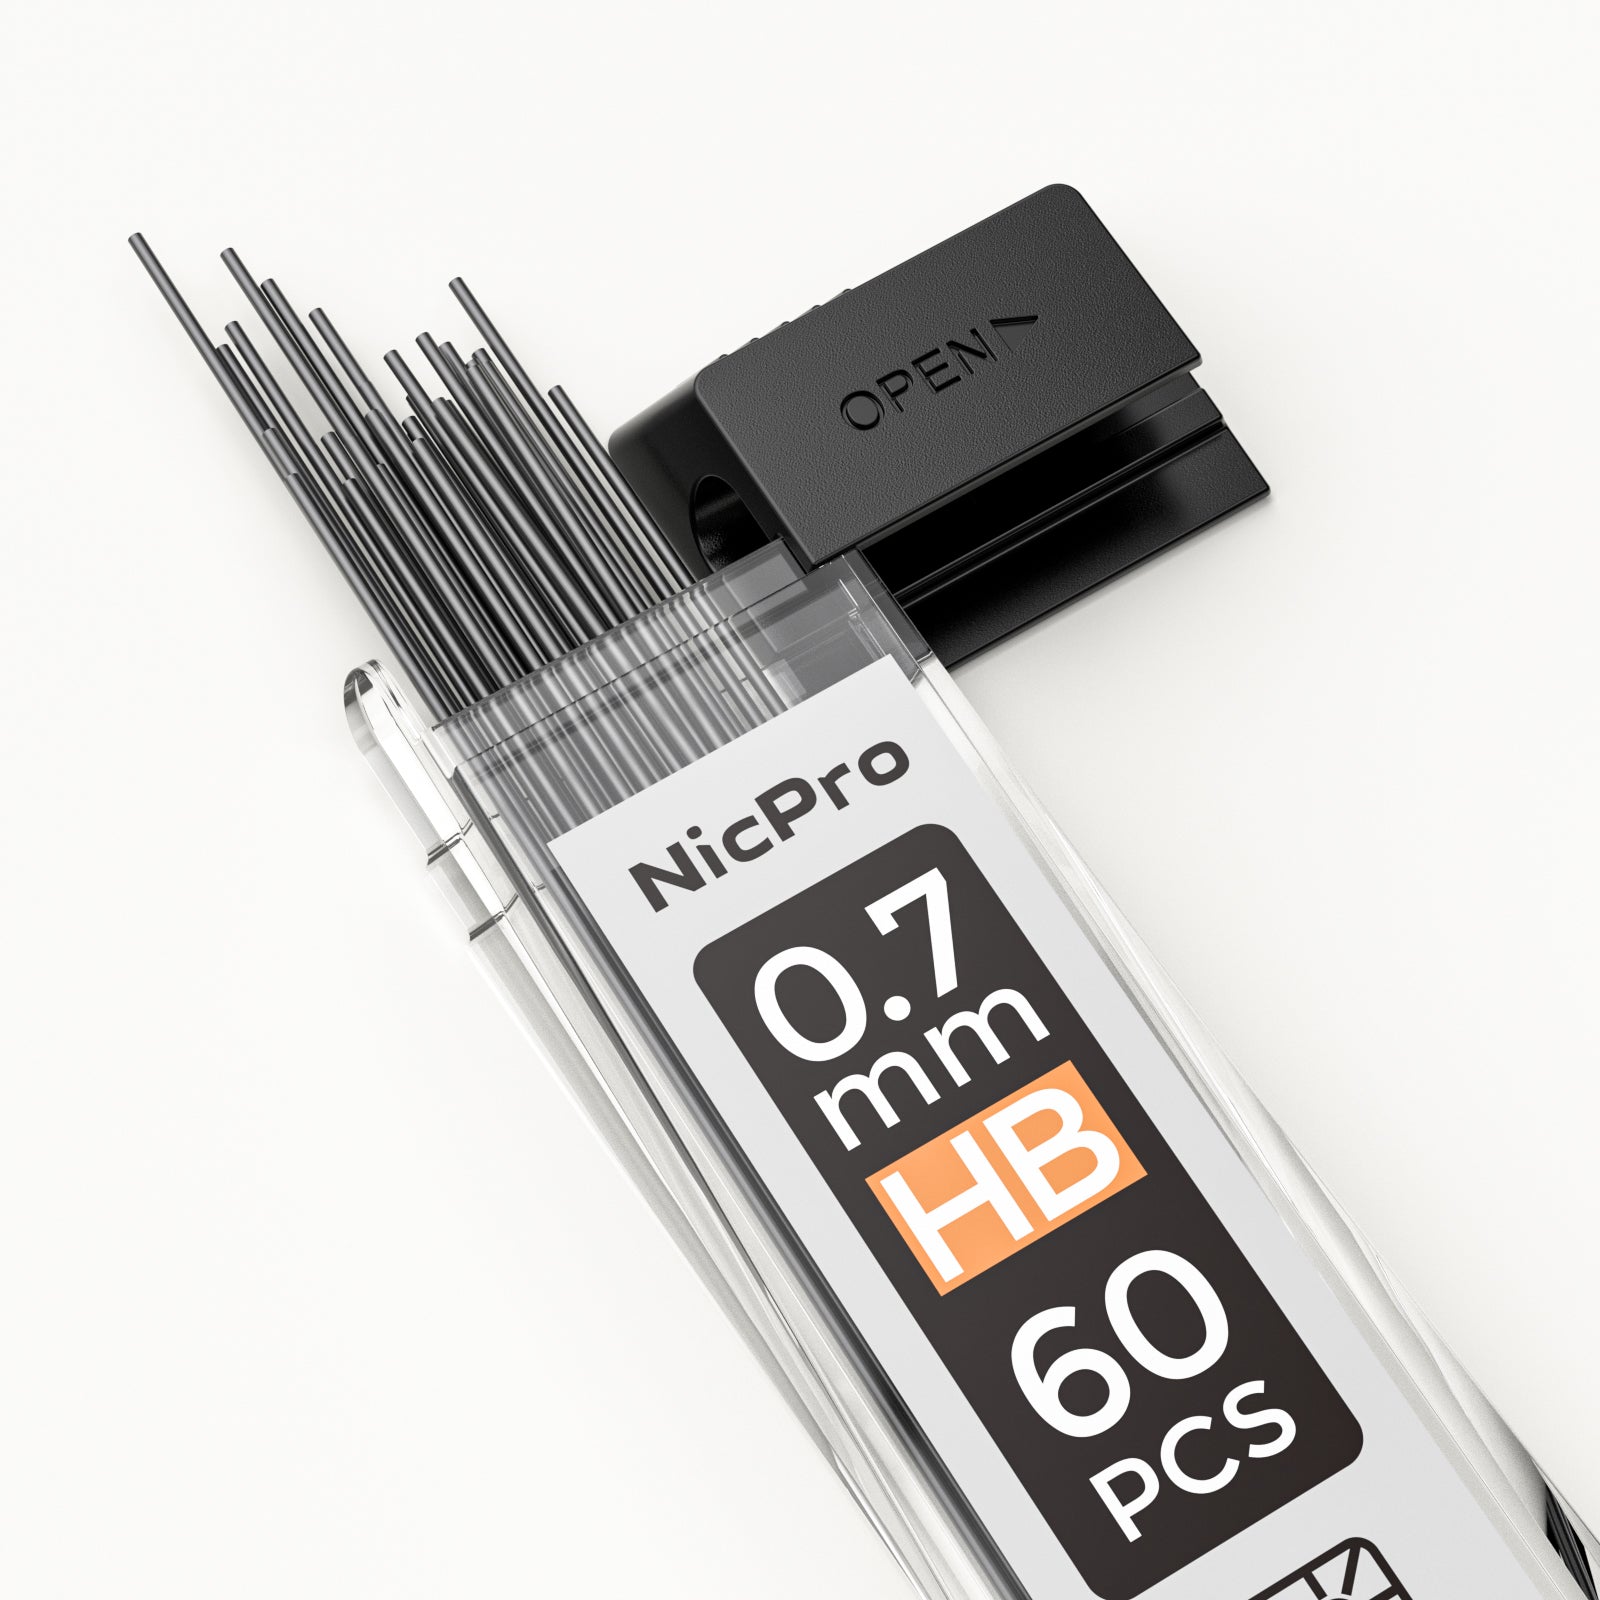 Nicpro 1200 PCS Lead Refills 0.7mm HB Break Resistant Mechanical Pencil Refills 0.7 mm, 60 Pack Per Tube, 20 Tubes